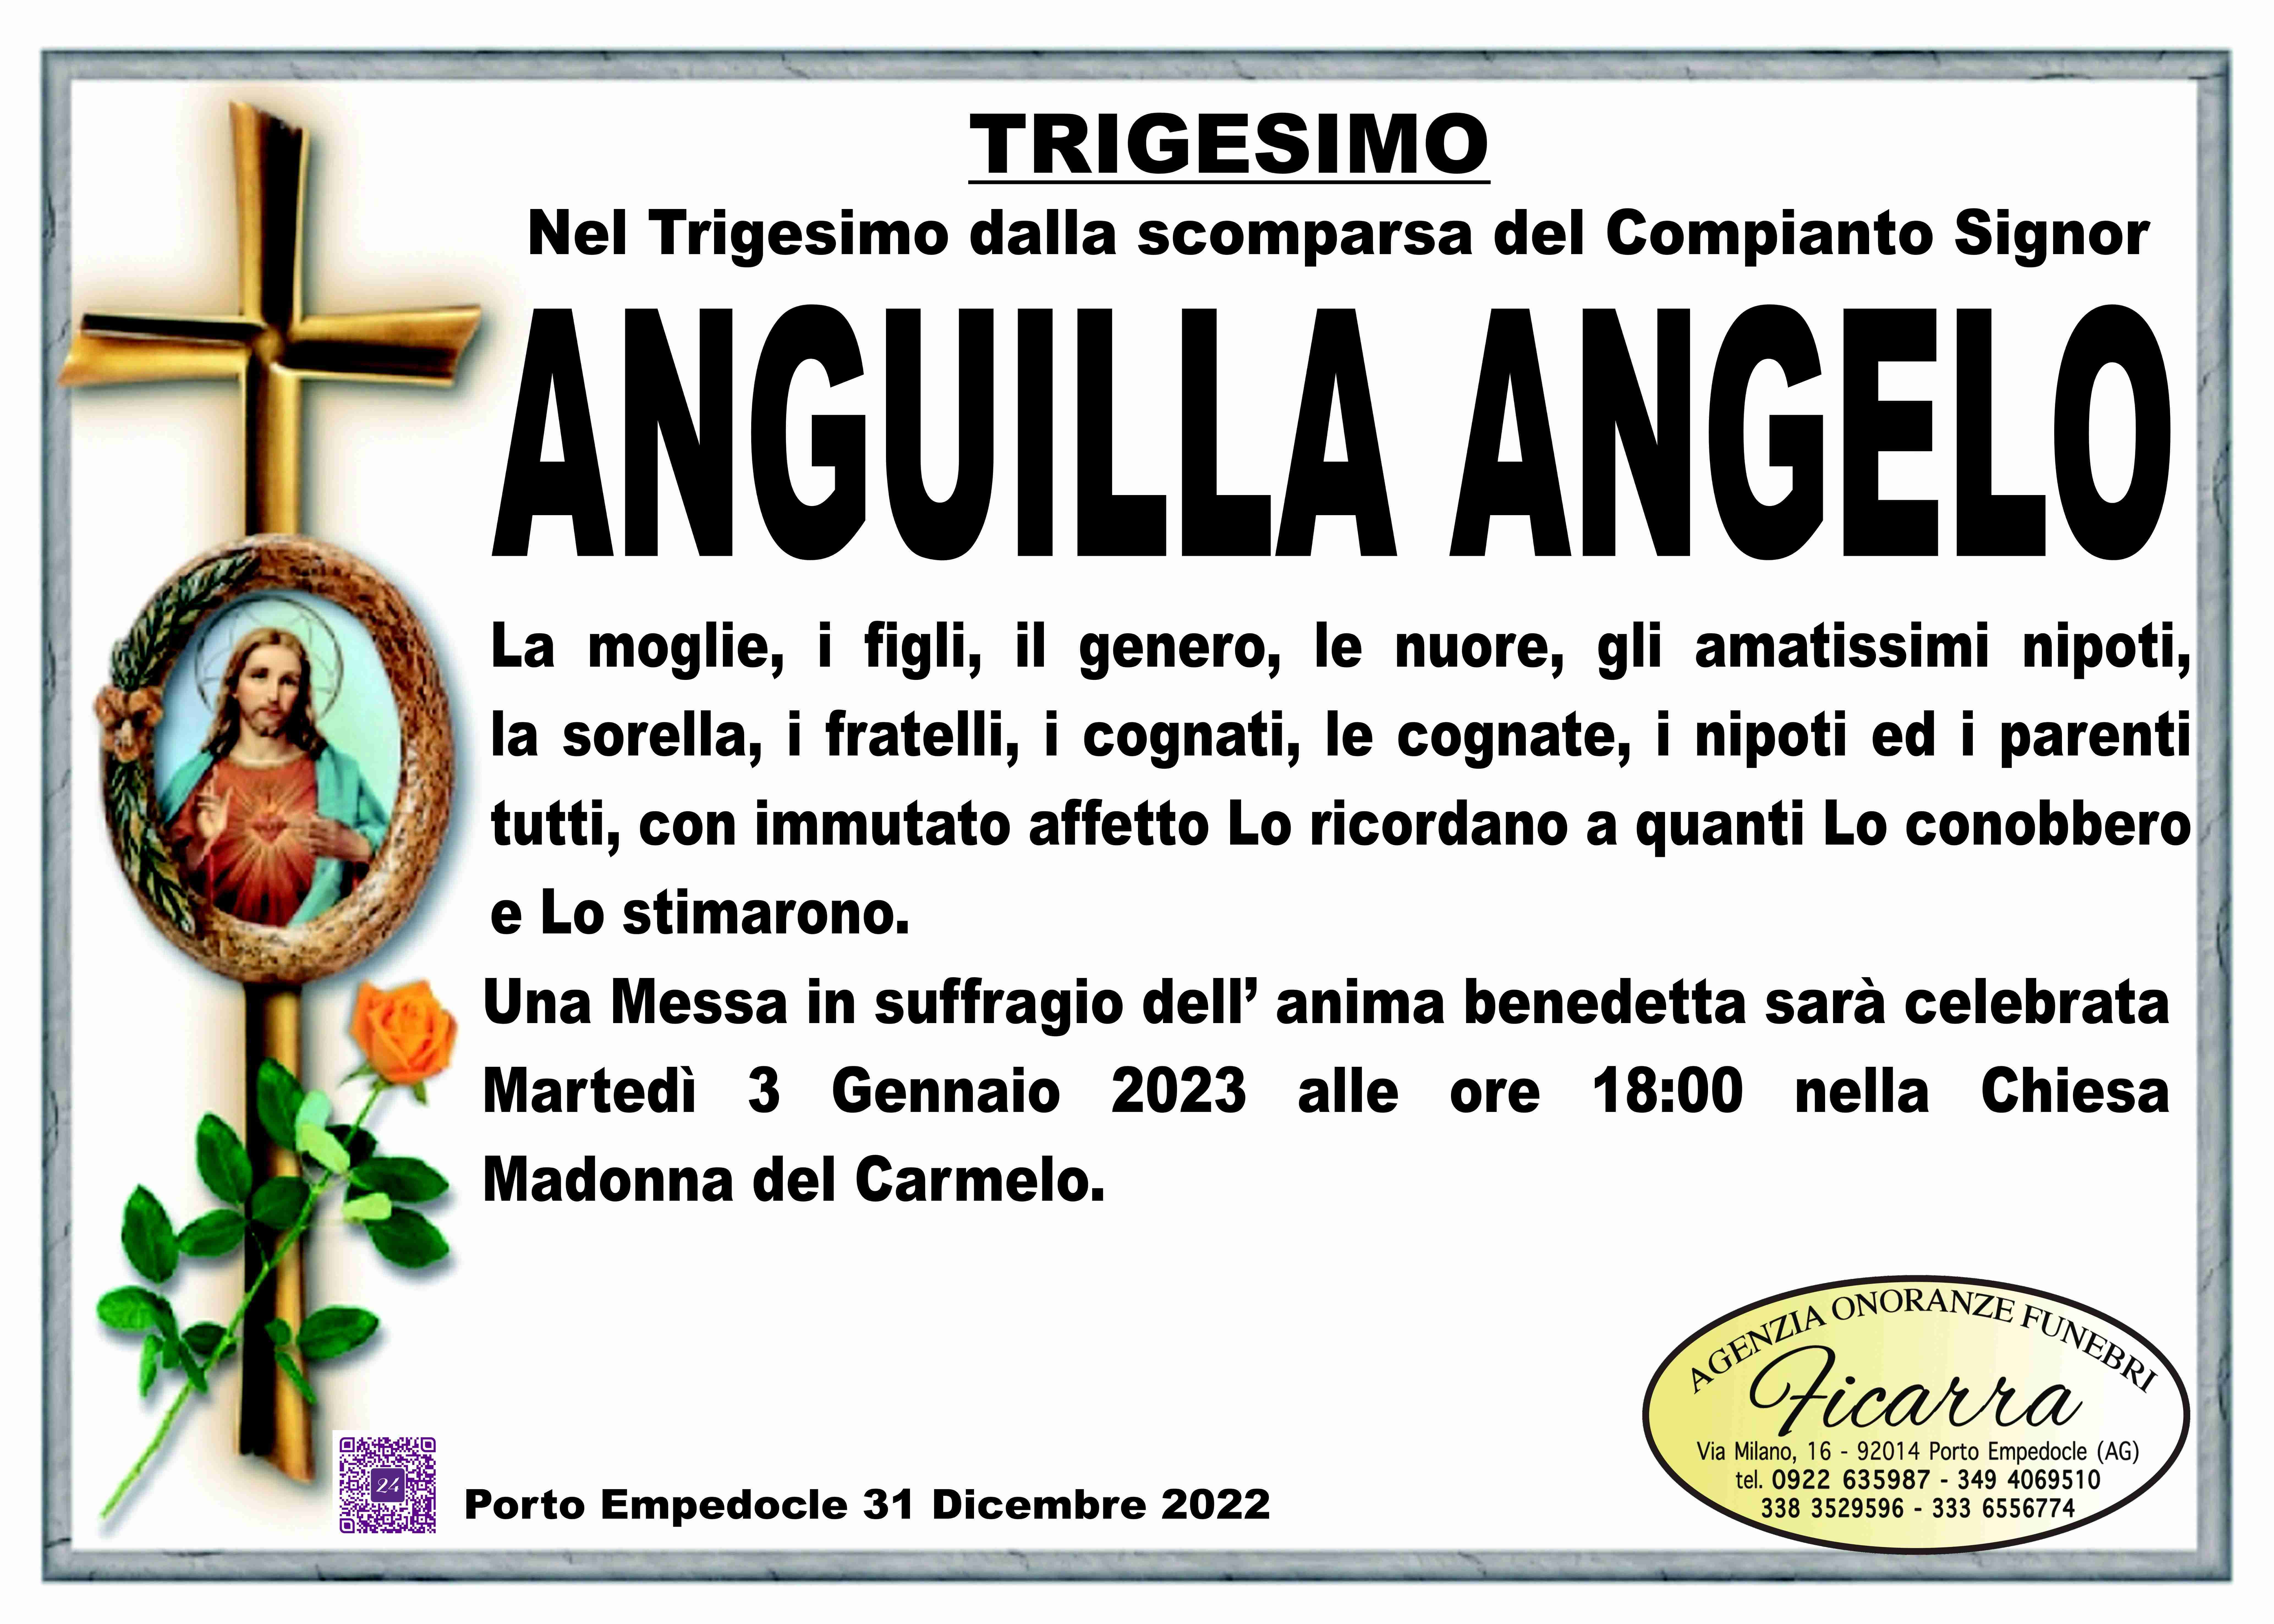 Angelo Anguilla